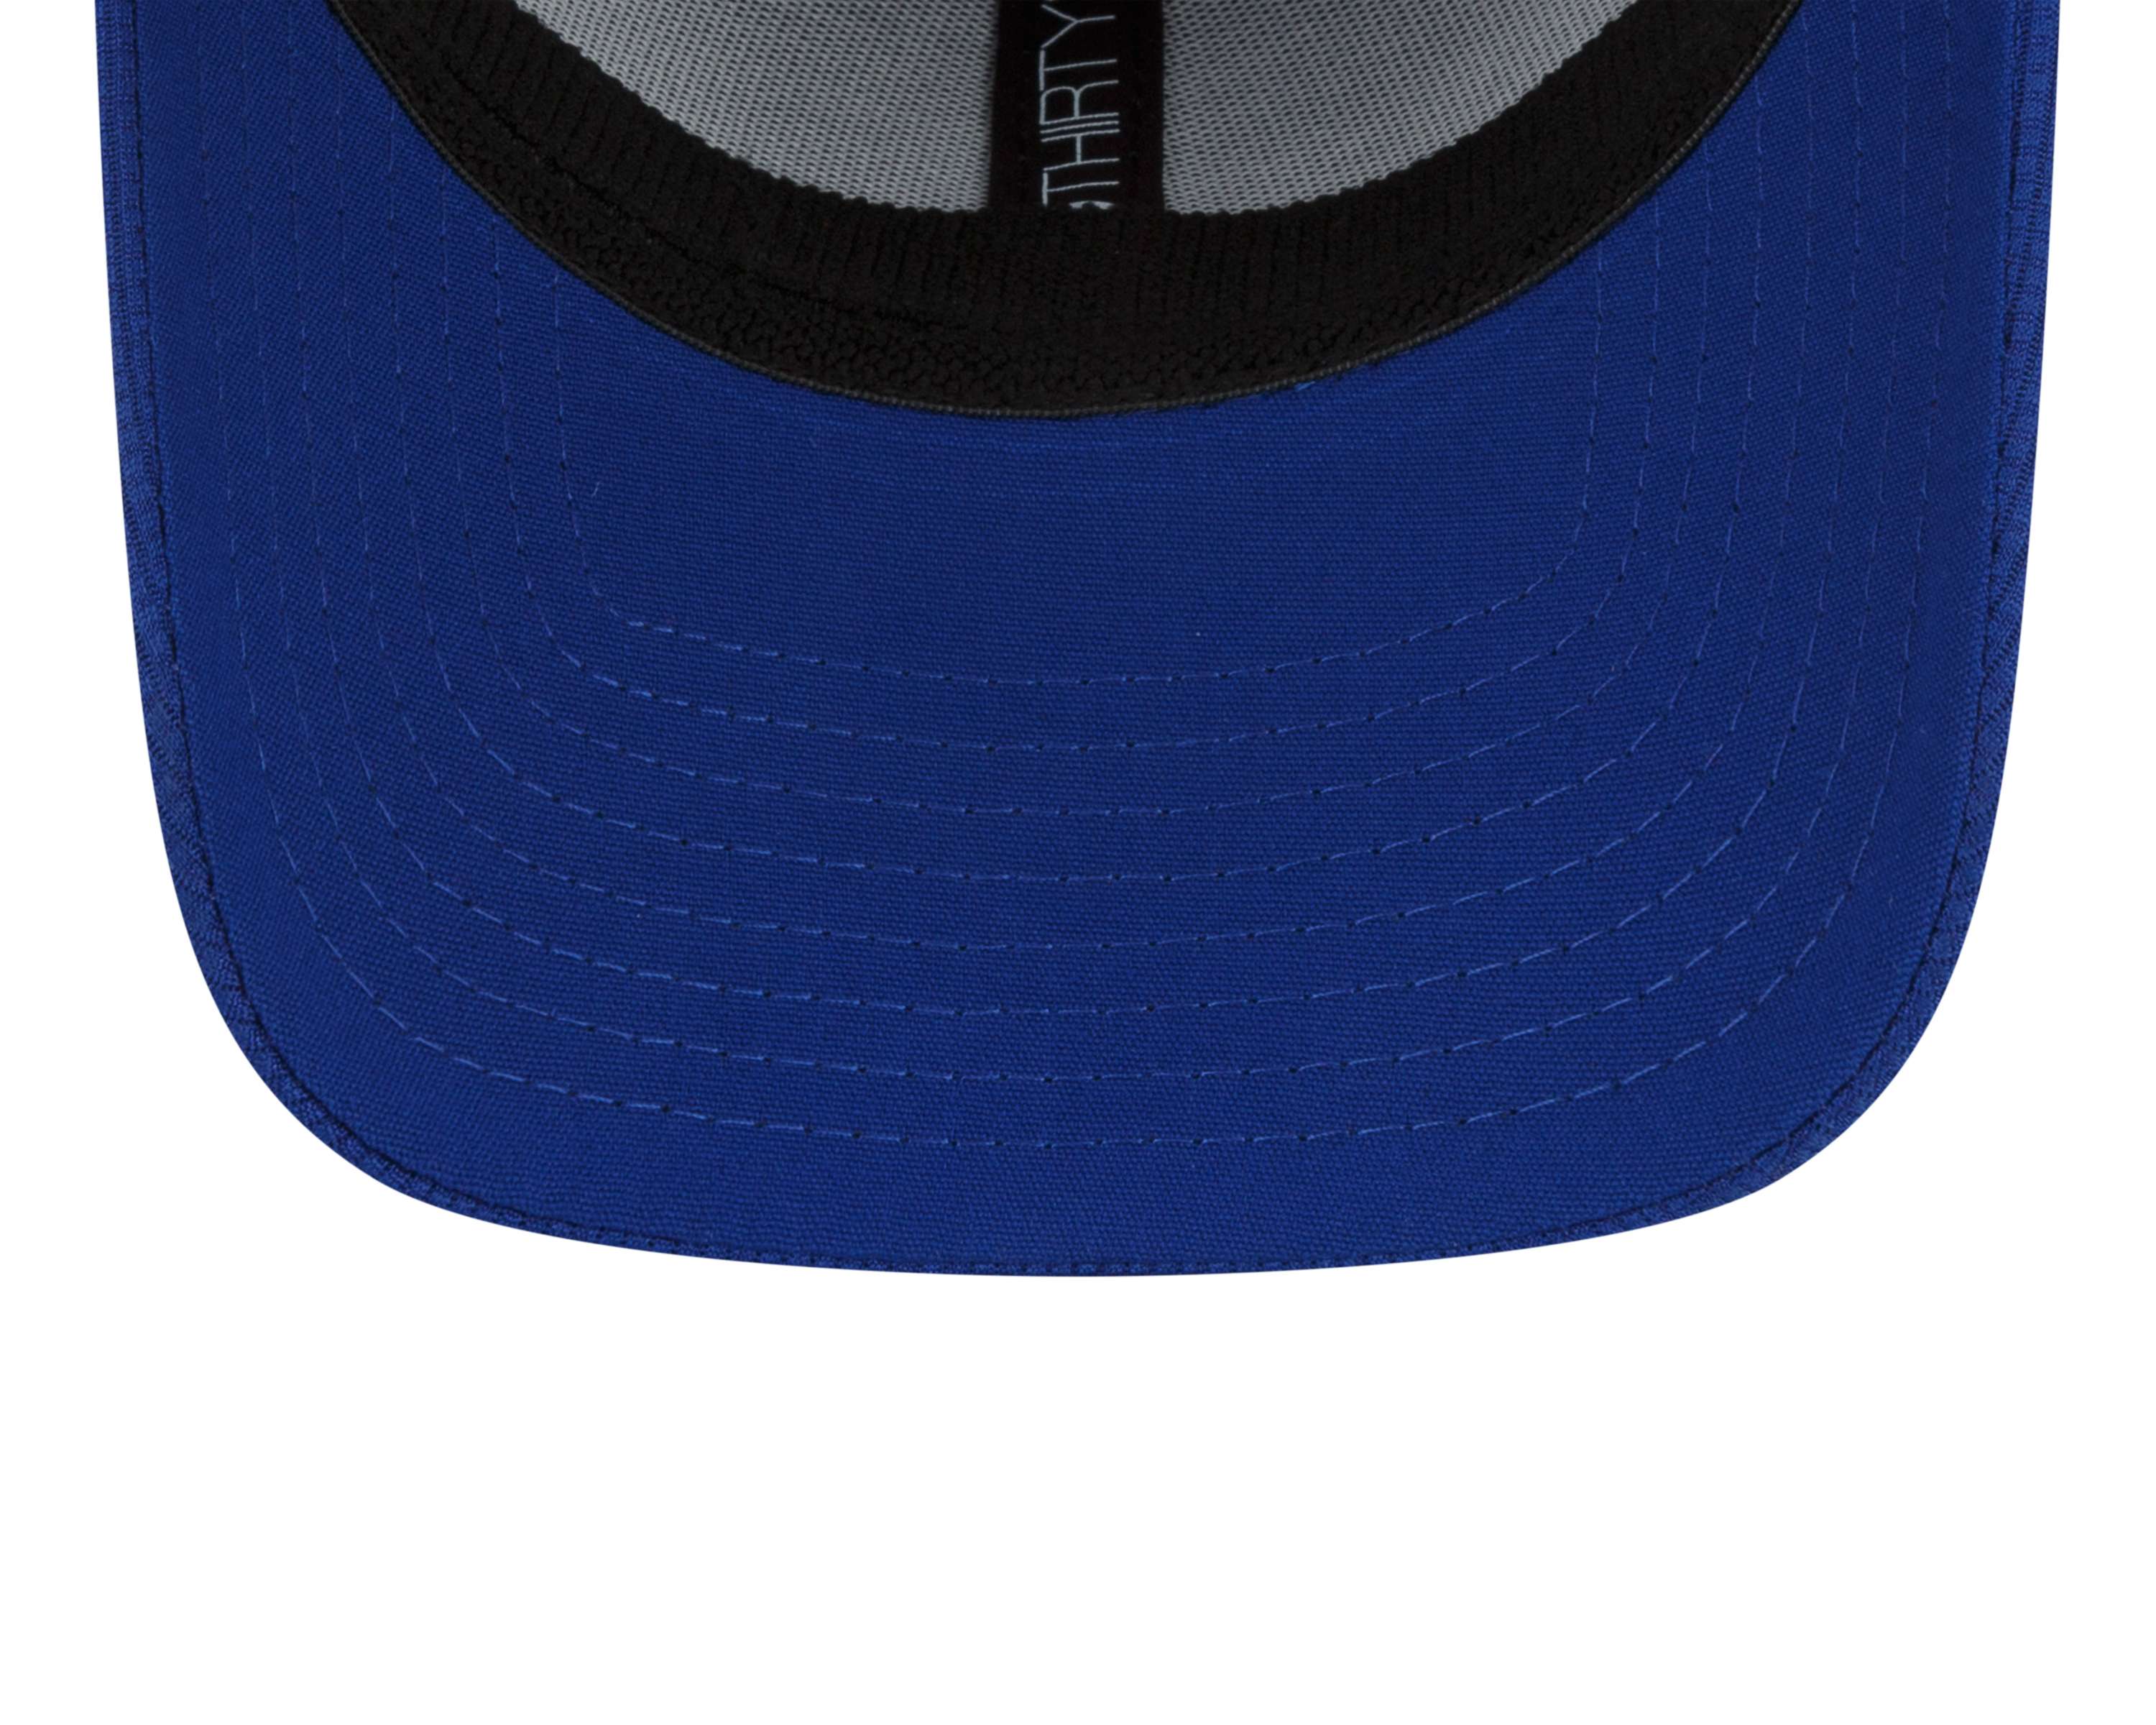 New Era - MLB Toronto Blue Jays 2022 Clubhouse 39Thirty Stretch Cap